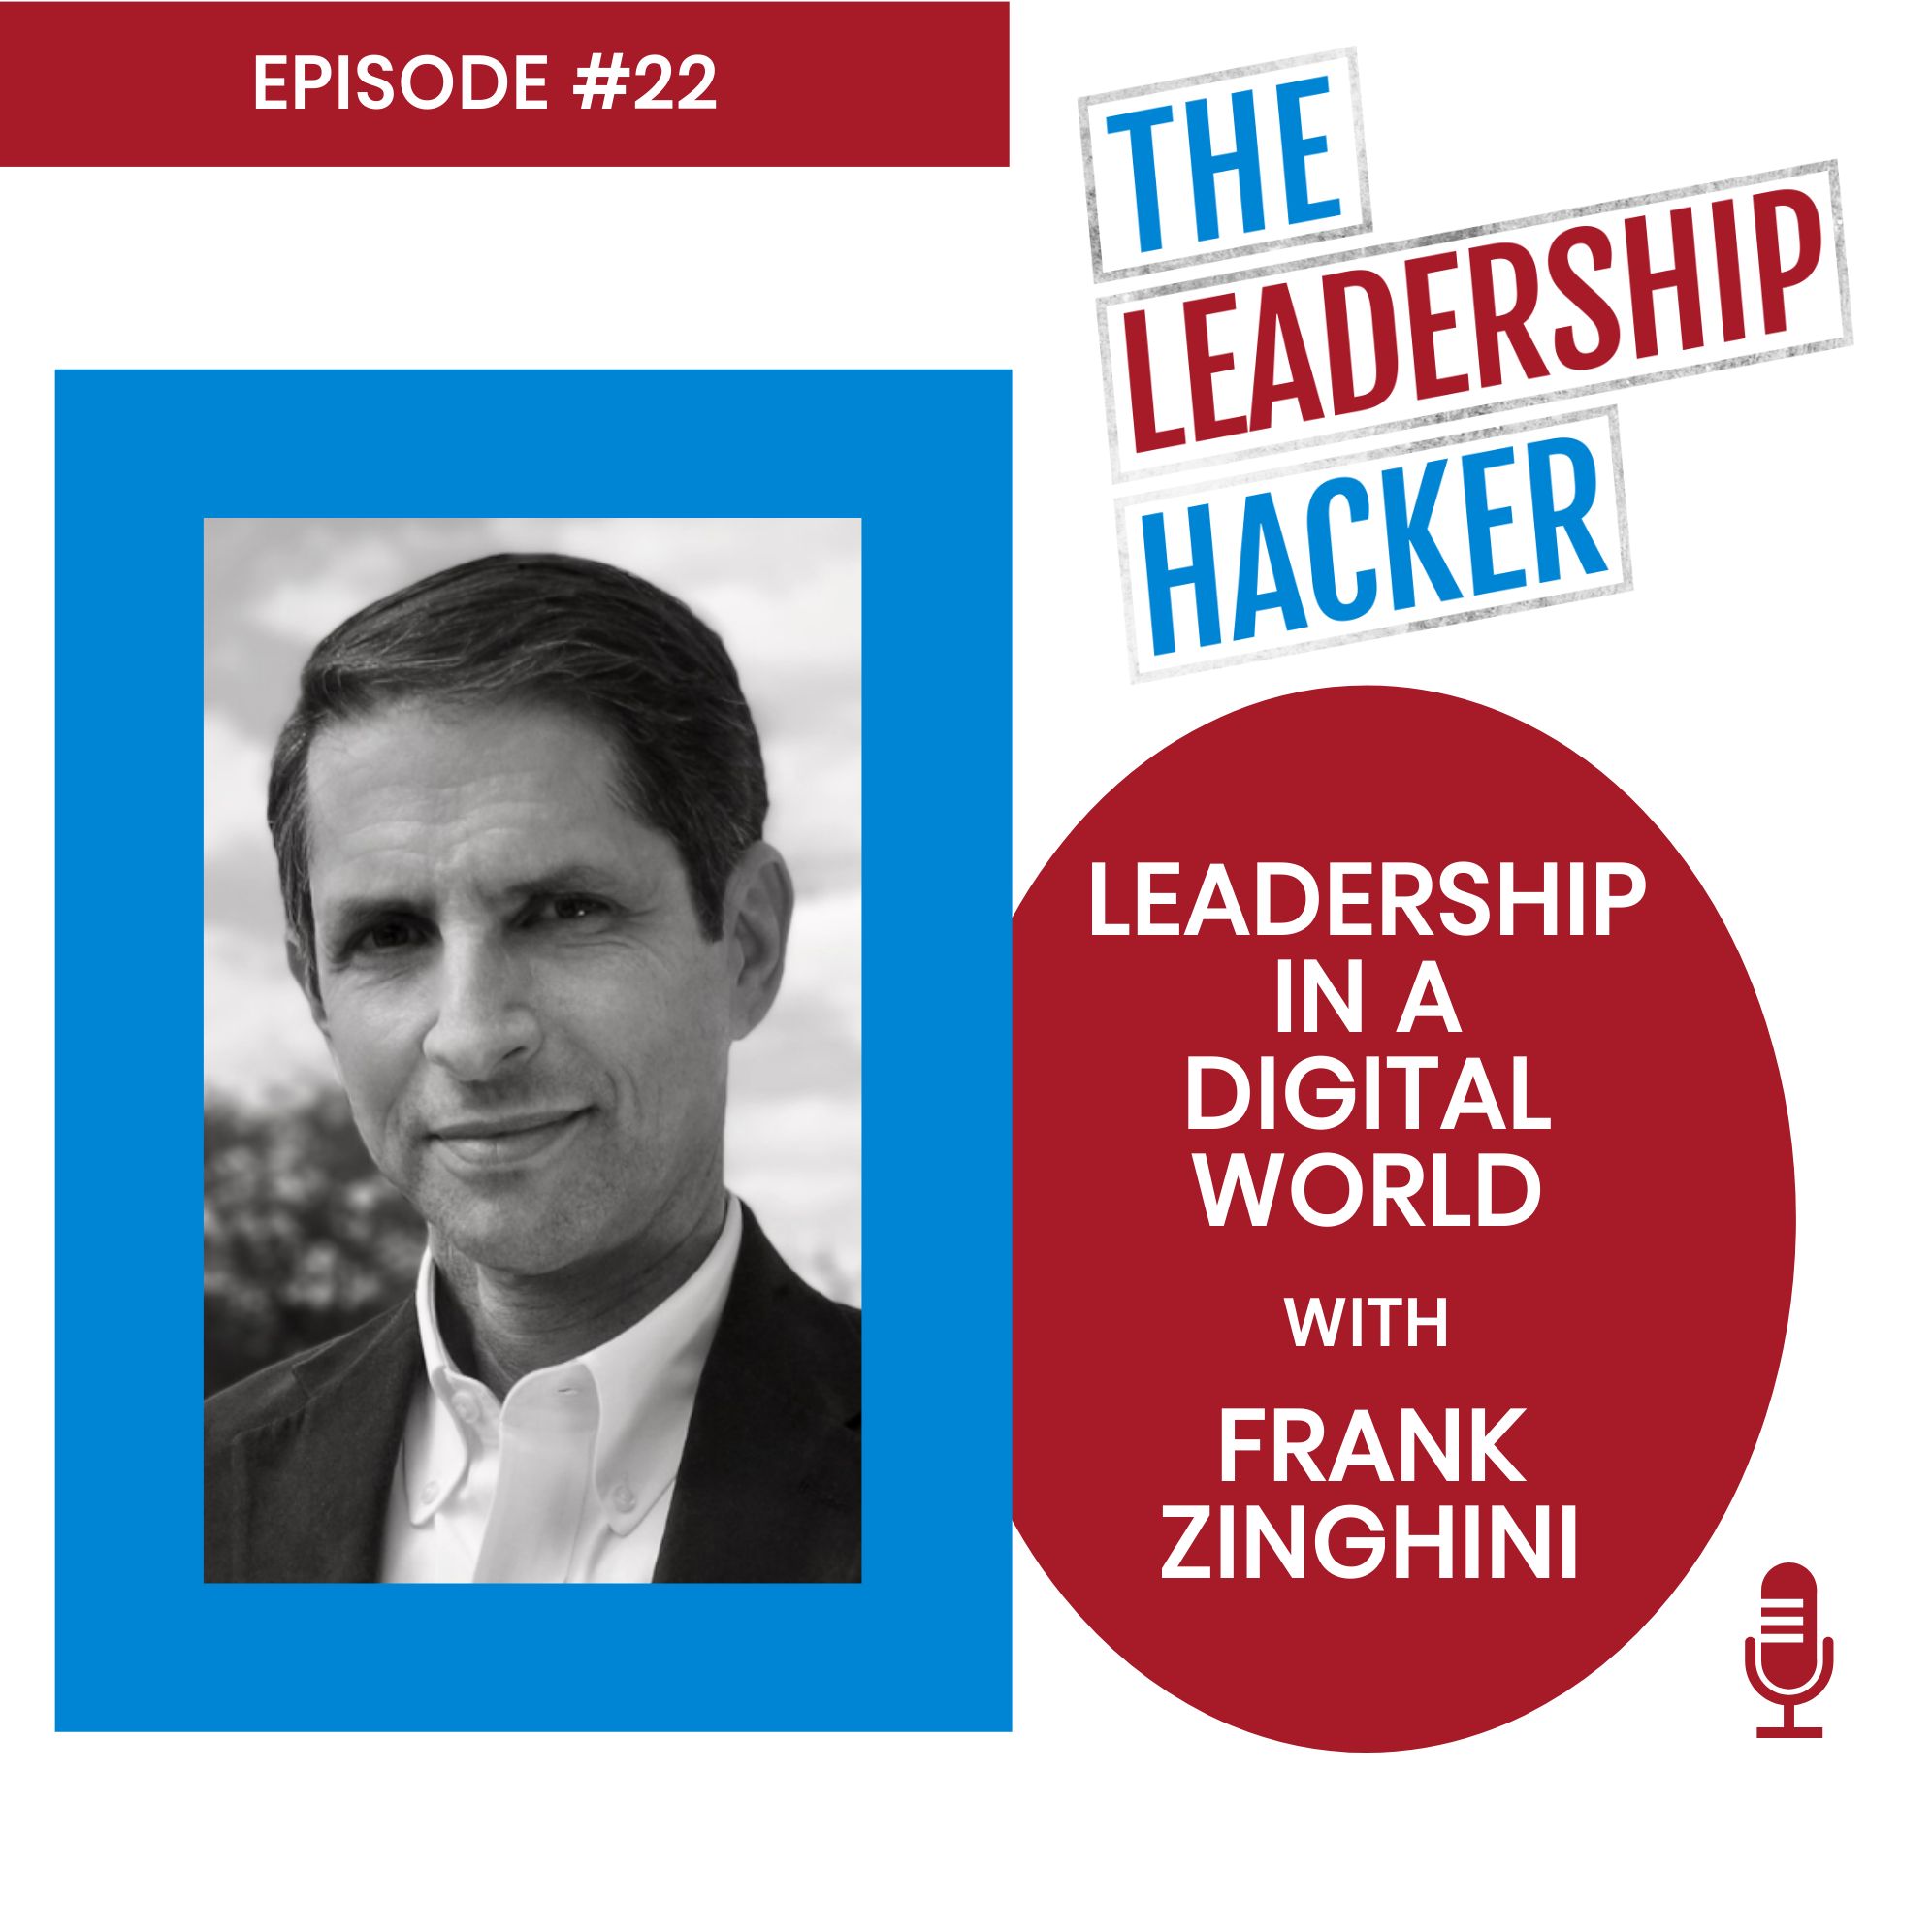 Frank_Zinghini_Leadership_Hacker.jpg